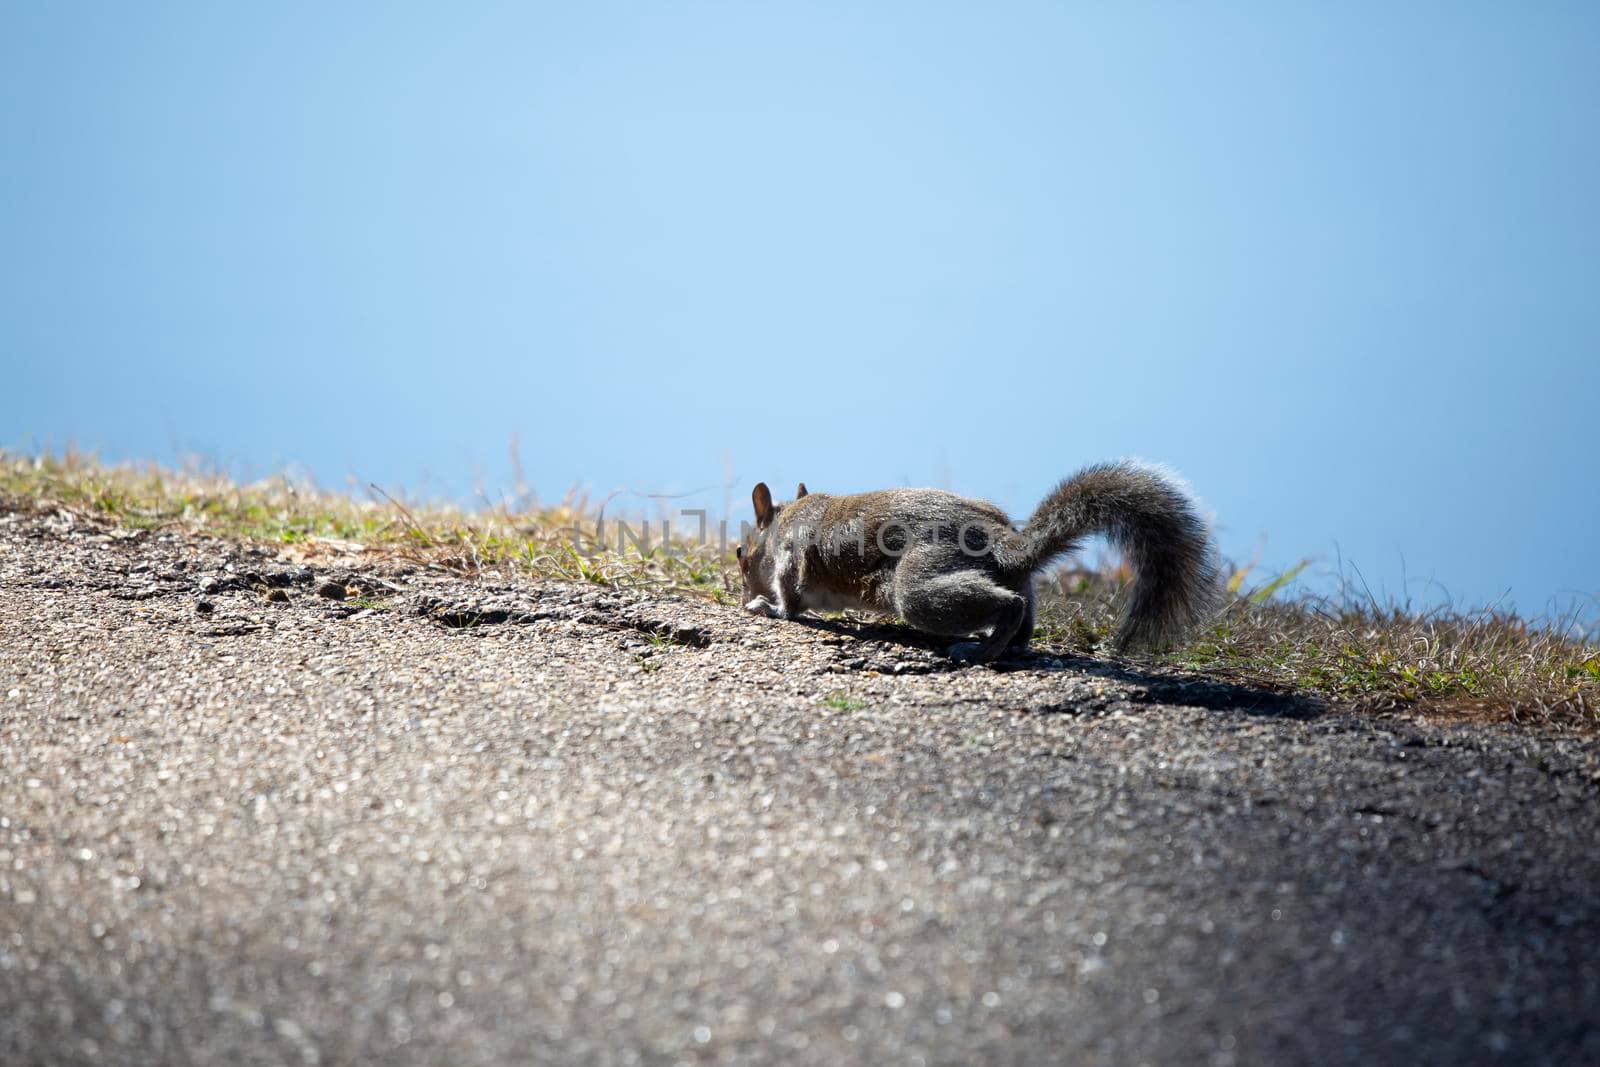 Eastern gray squirrel (Sciurus carolinensis) sniffing the ground as it walks along grass edging an aspalt path